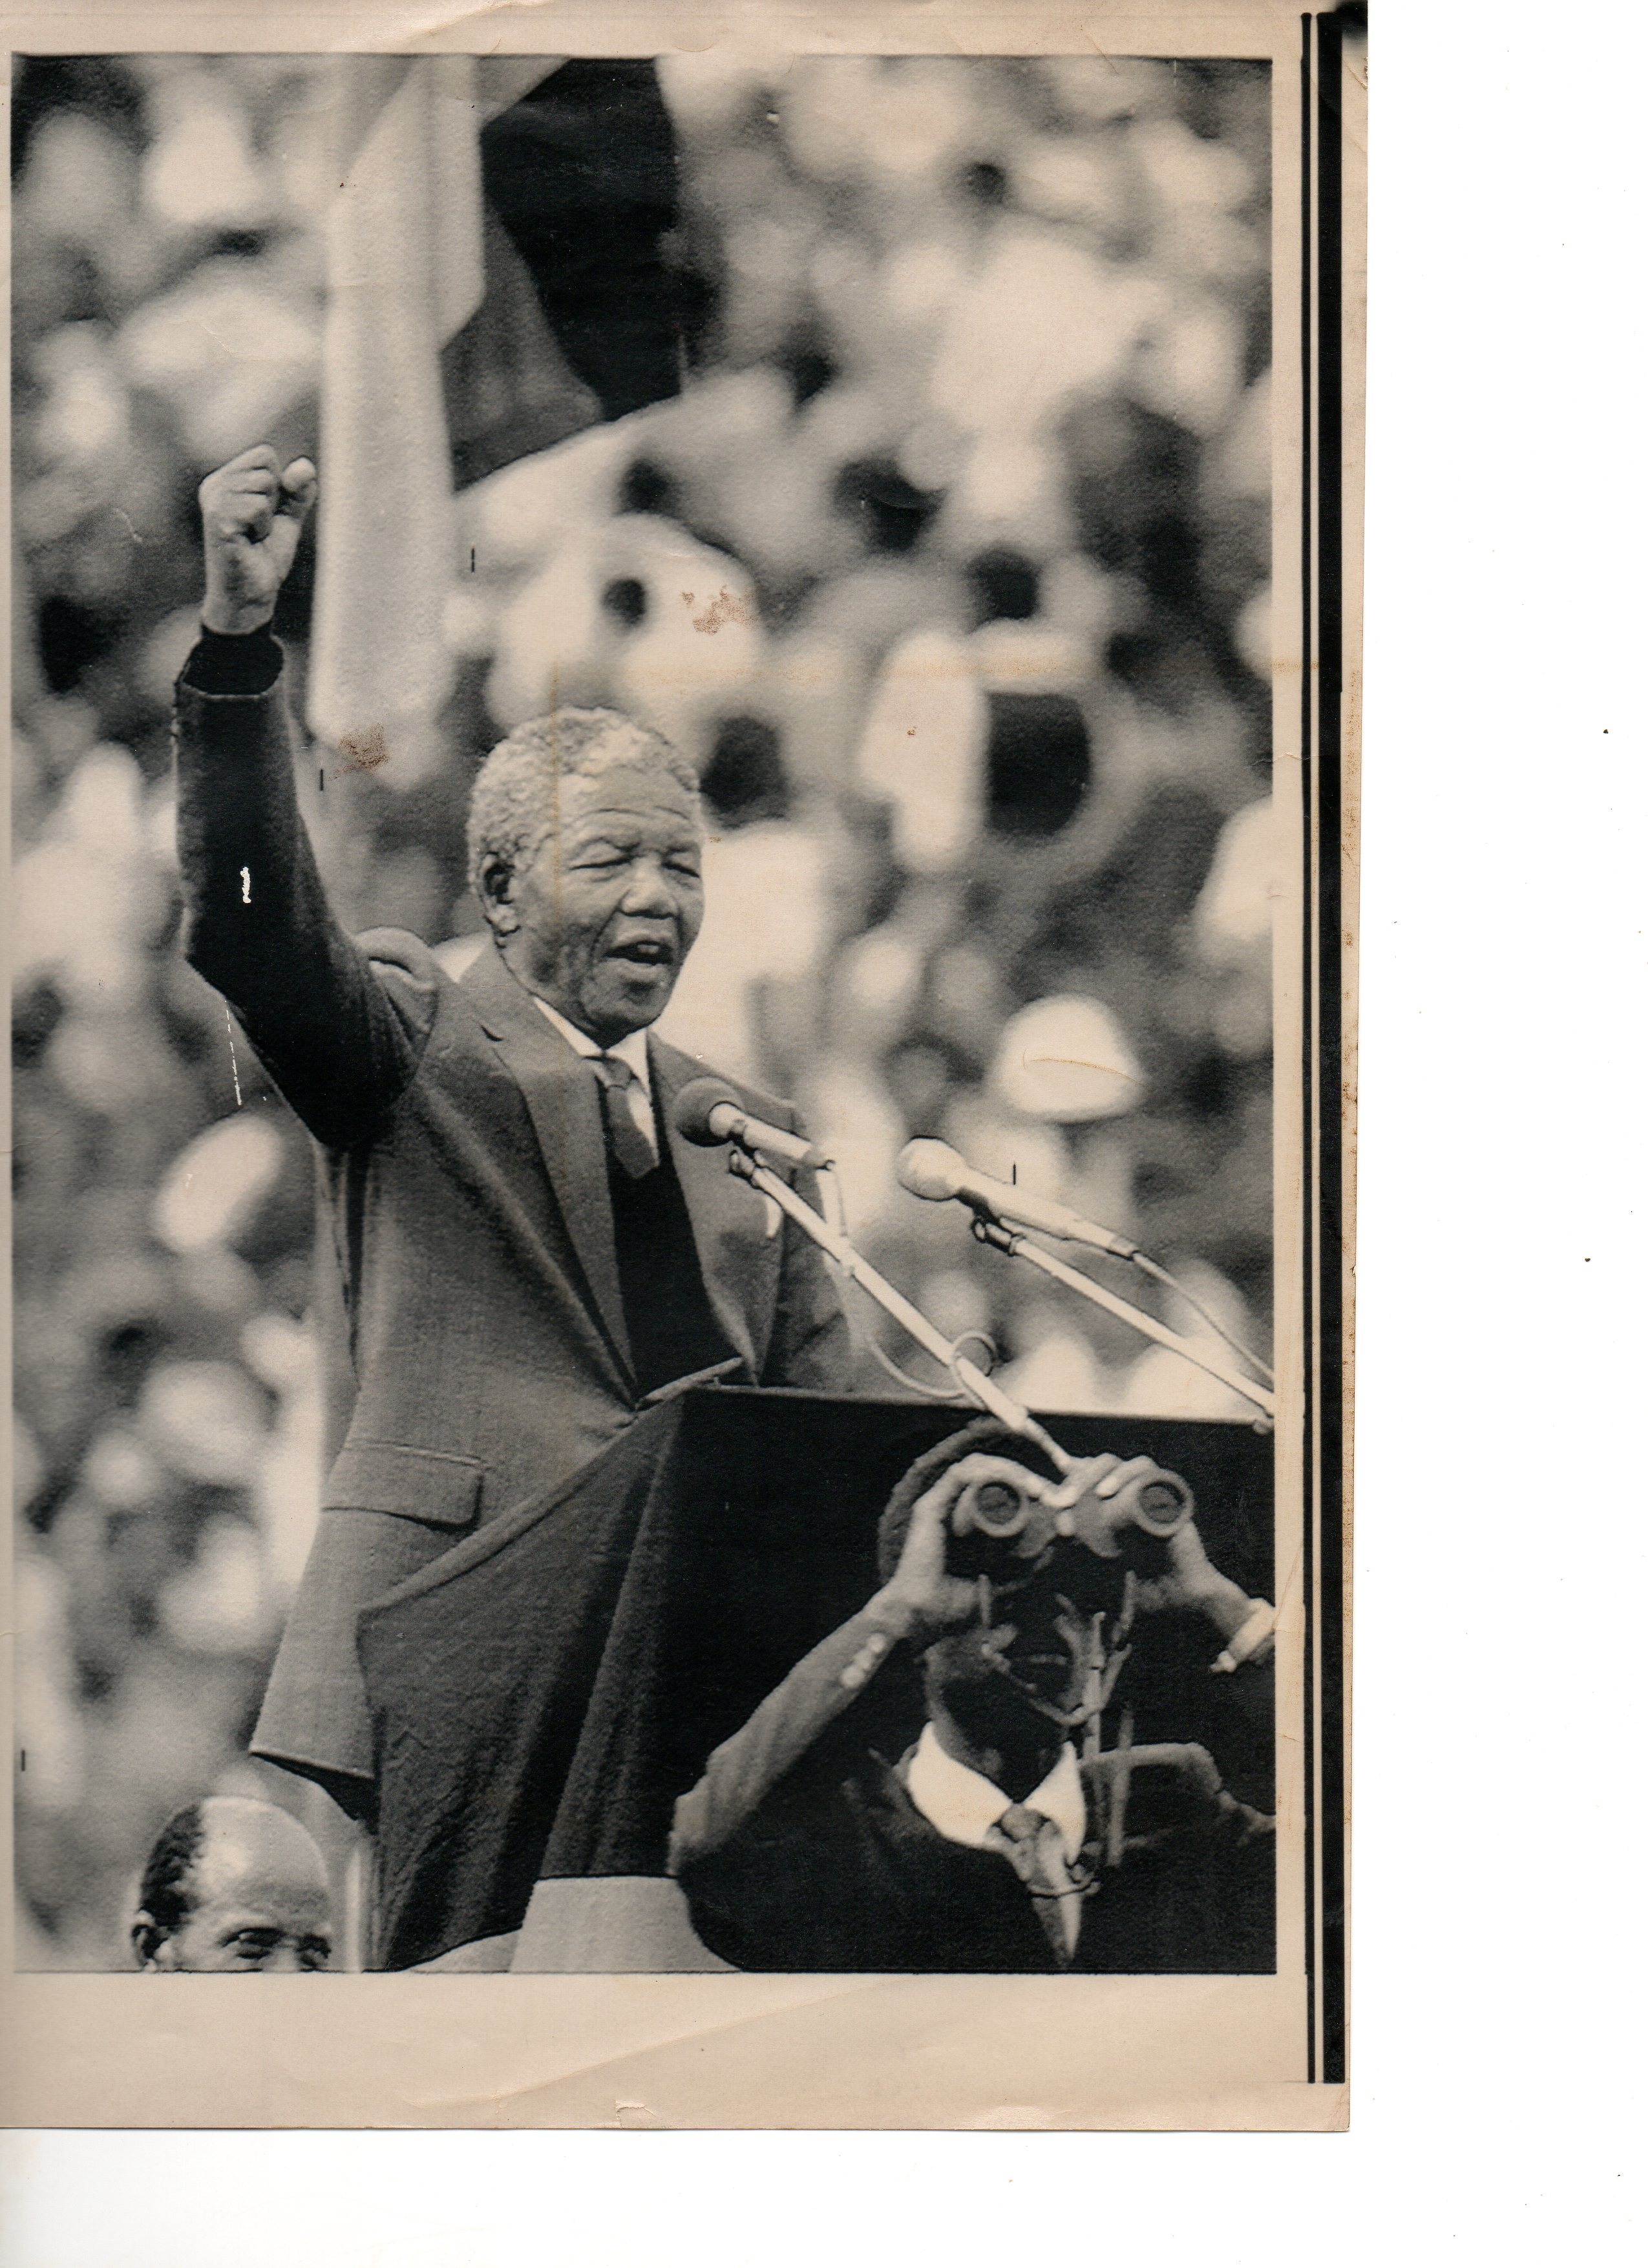 Statesman Nelson Mandela dead at 95